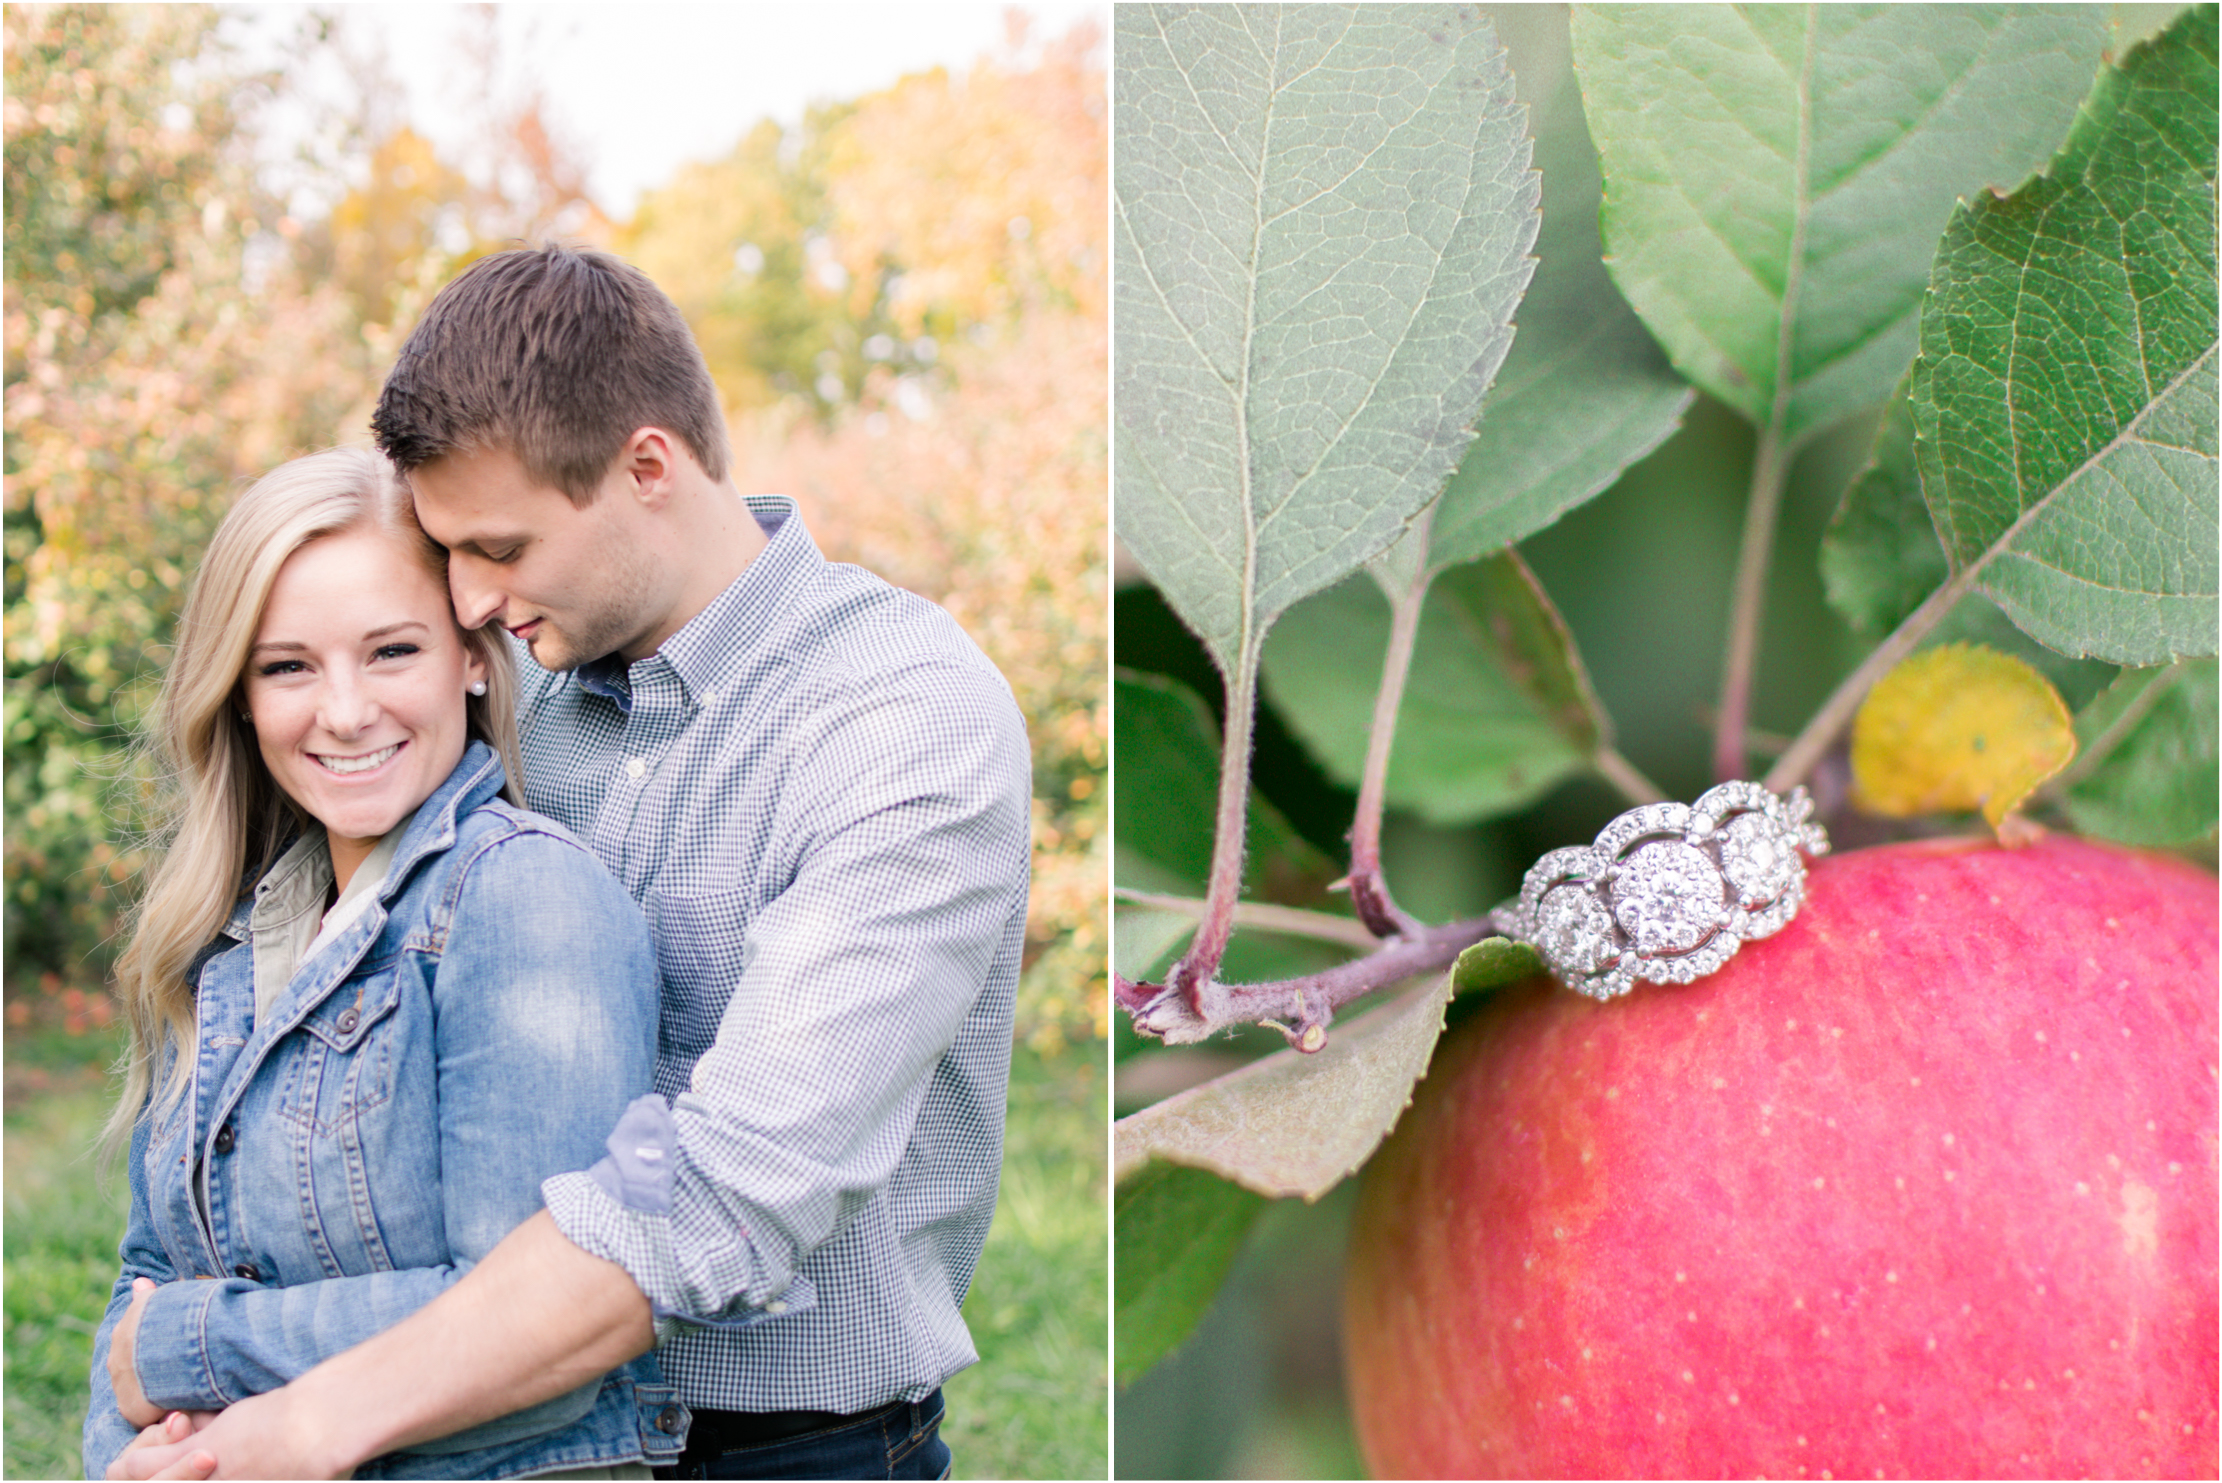 Rose Courts Photography Fort Wayne Indianapolis Indiana Wedding Photographer Apple Orchard Engagement Photography